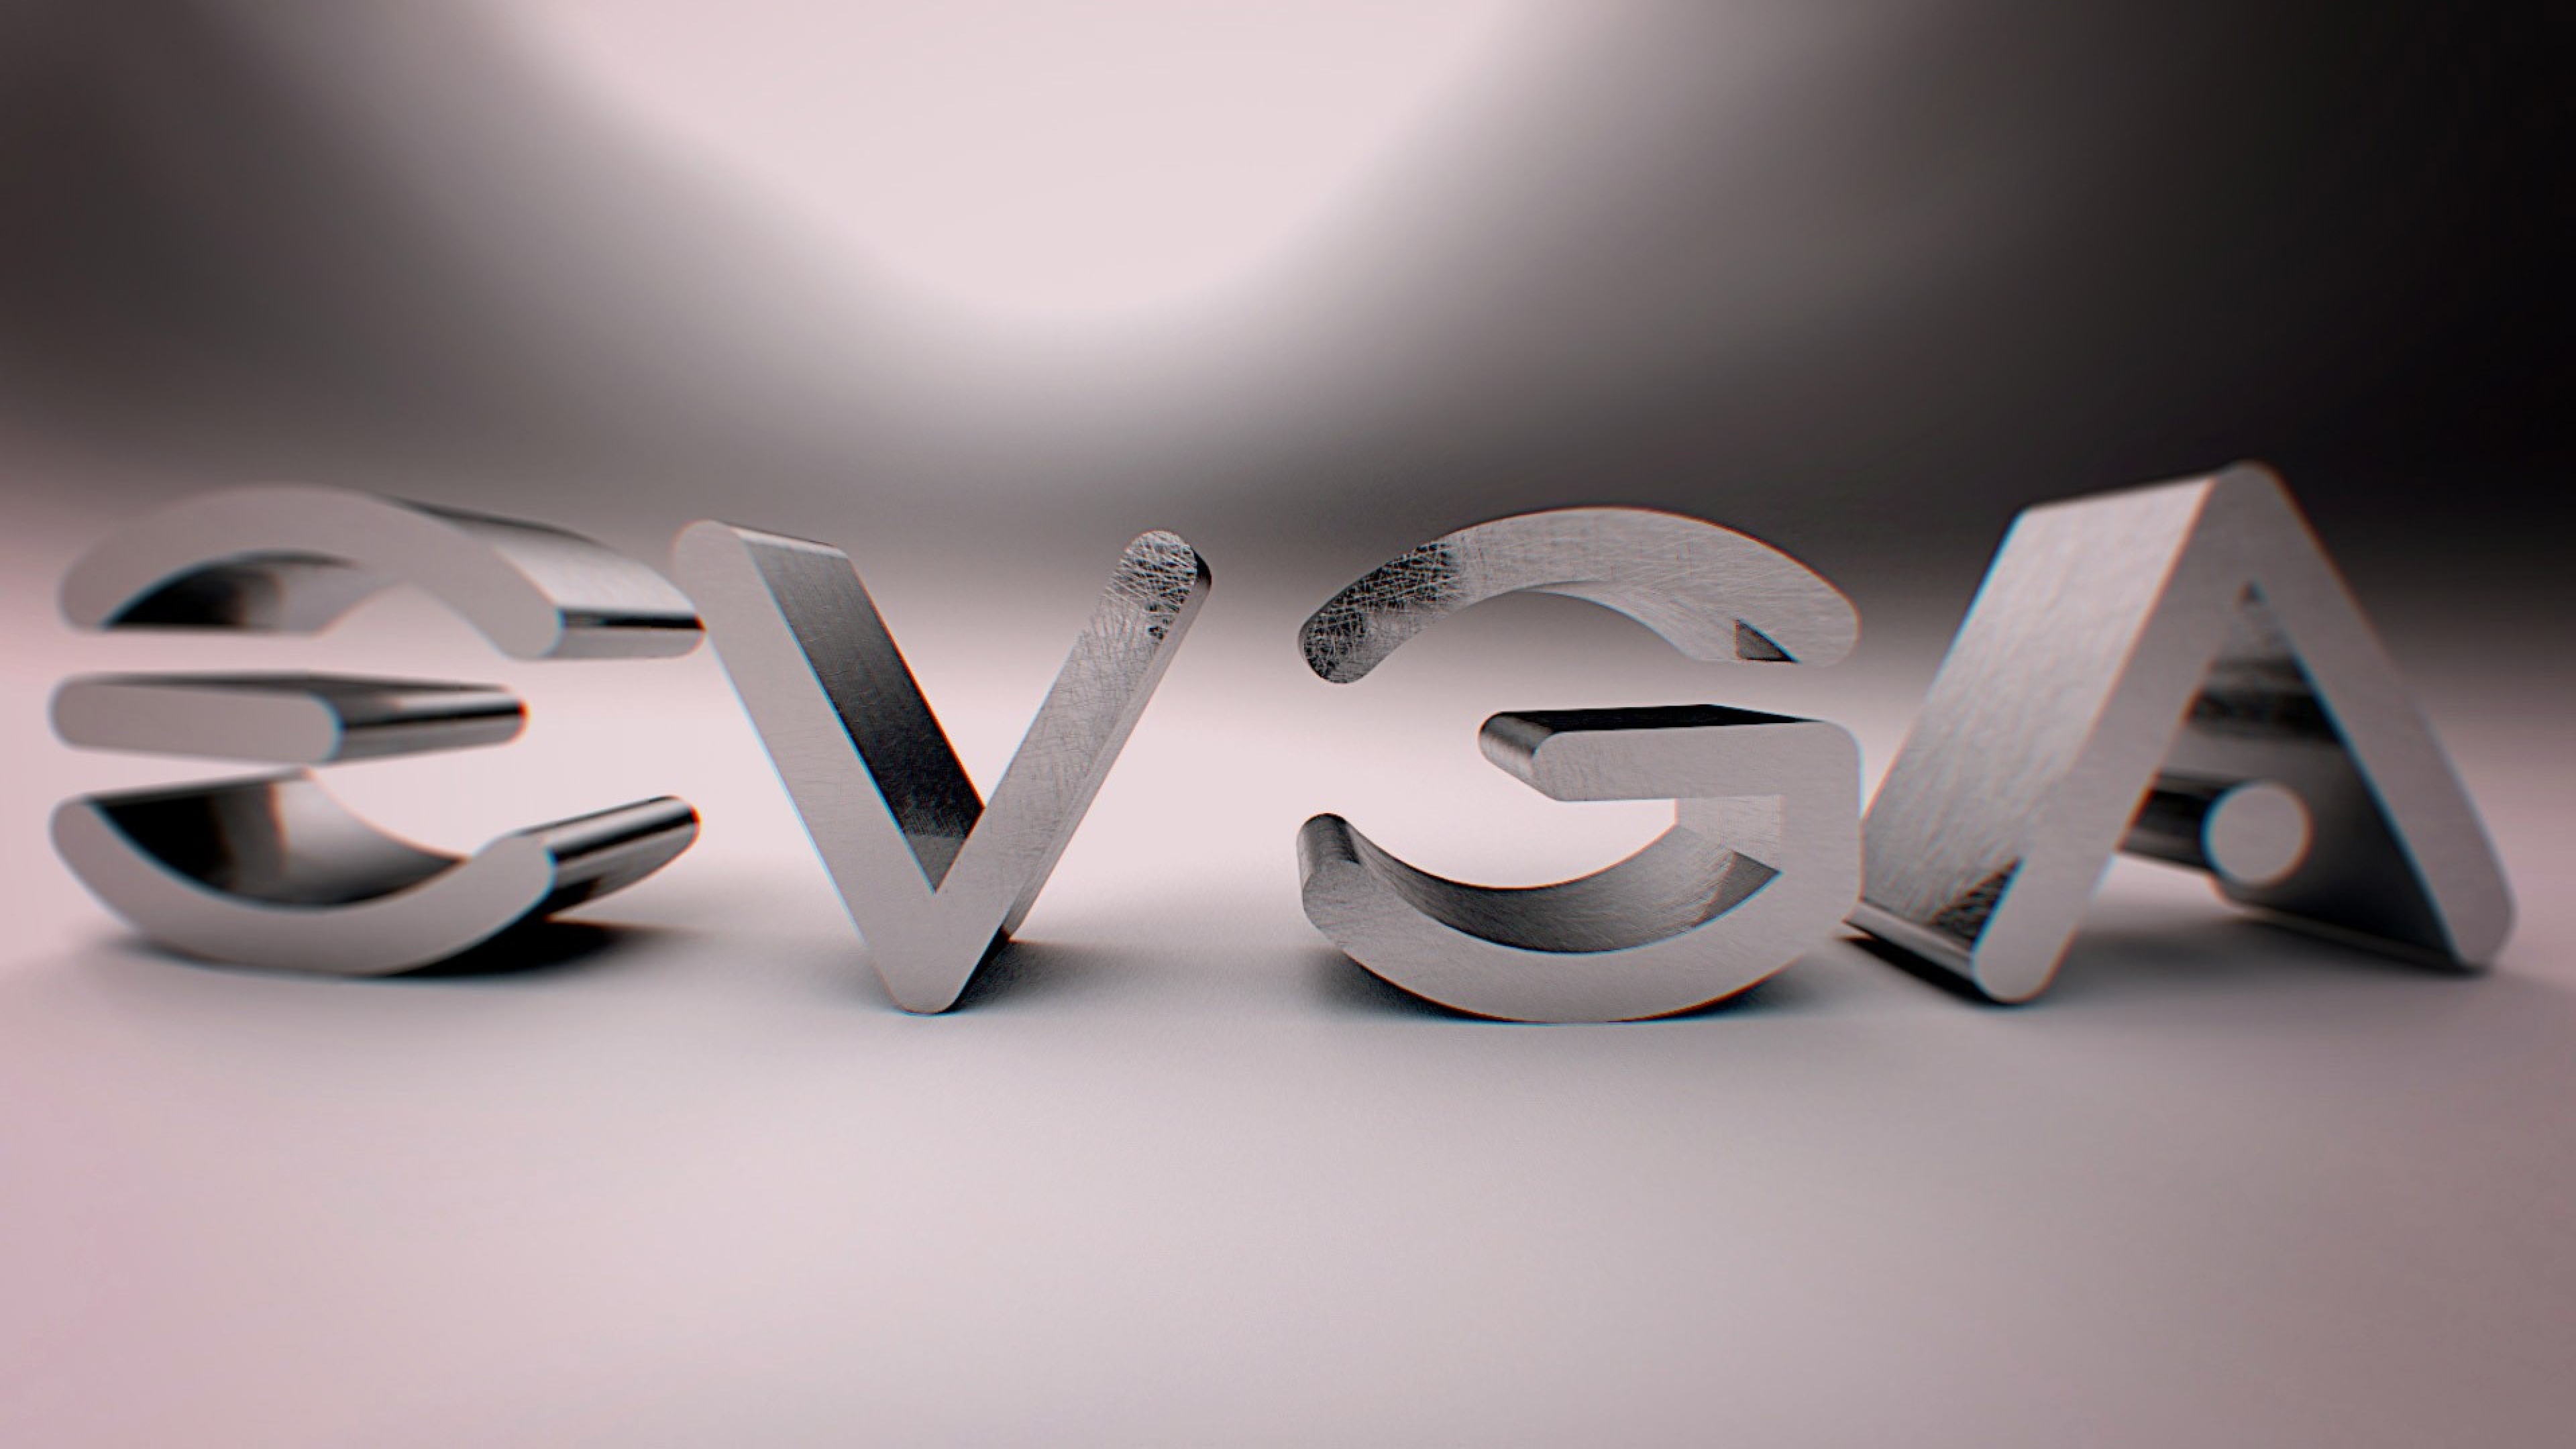 Evga Corporation Nvidia Puter Technology Brand Wallpaper